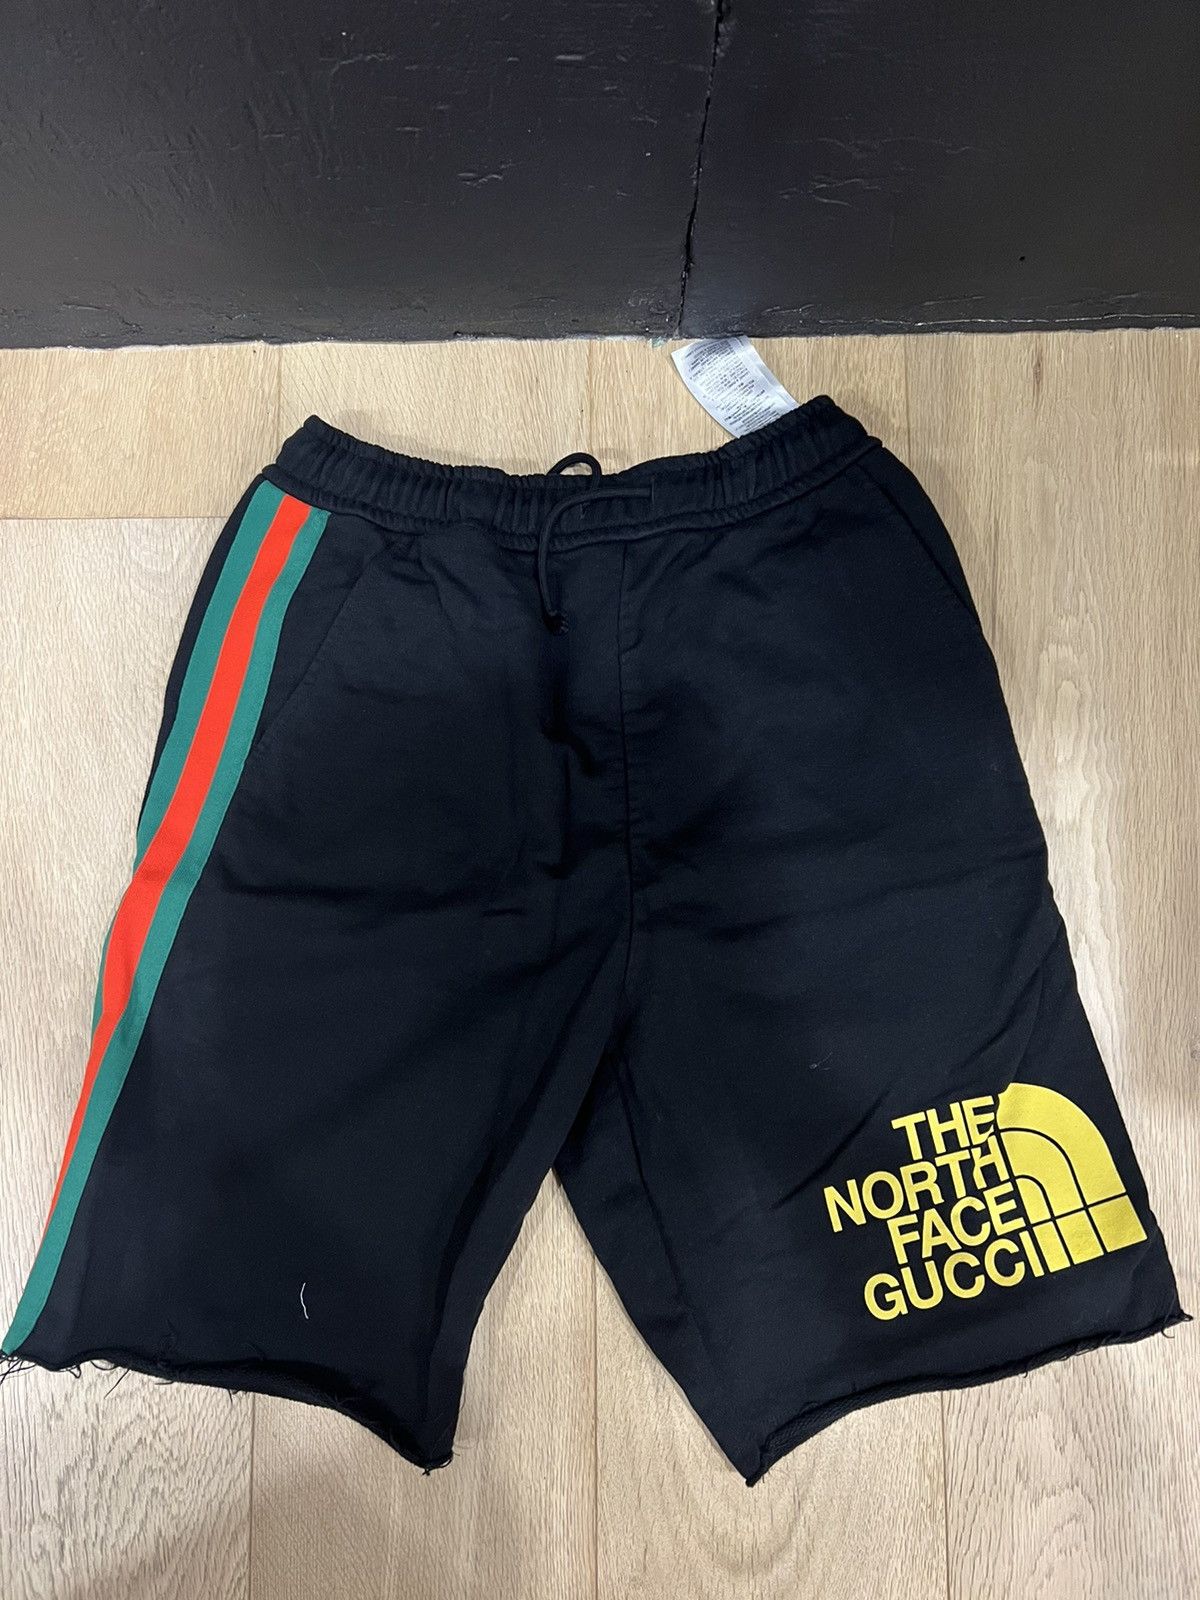 Gucci North Face Shorts FOR SALE! - PicClick